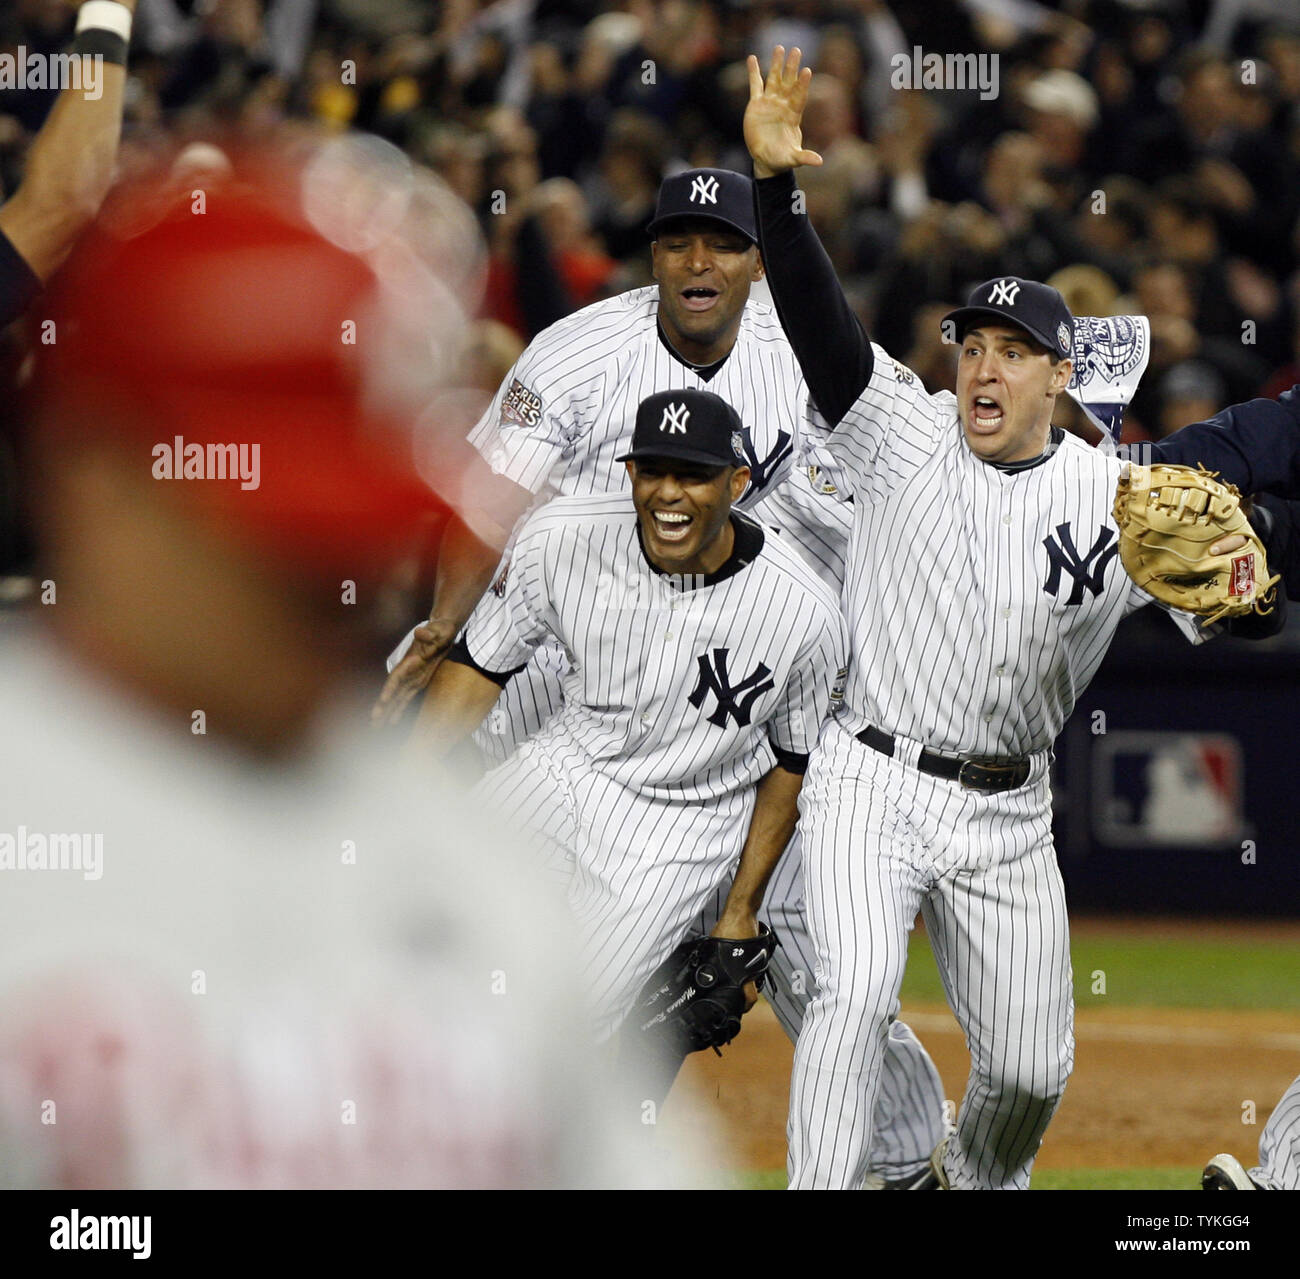 Photo: New York Yankees win World Series against the Philadelphia